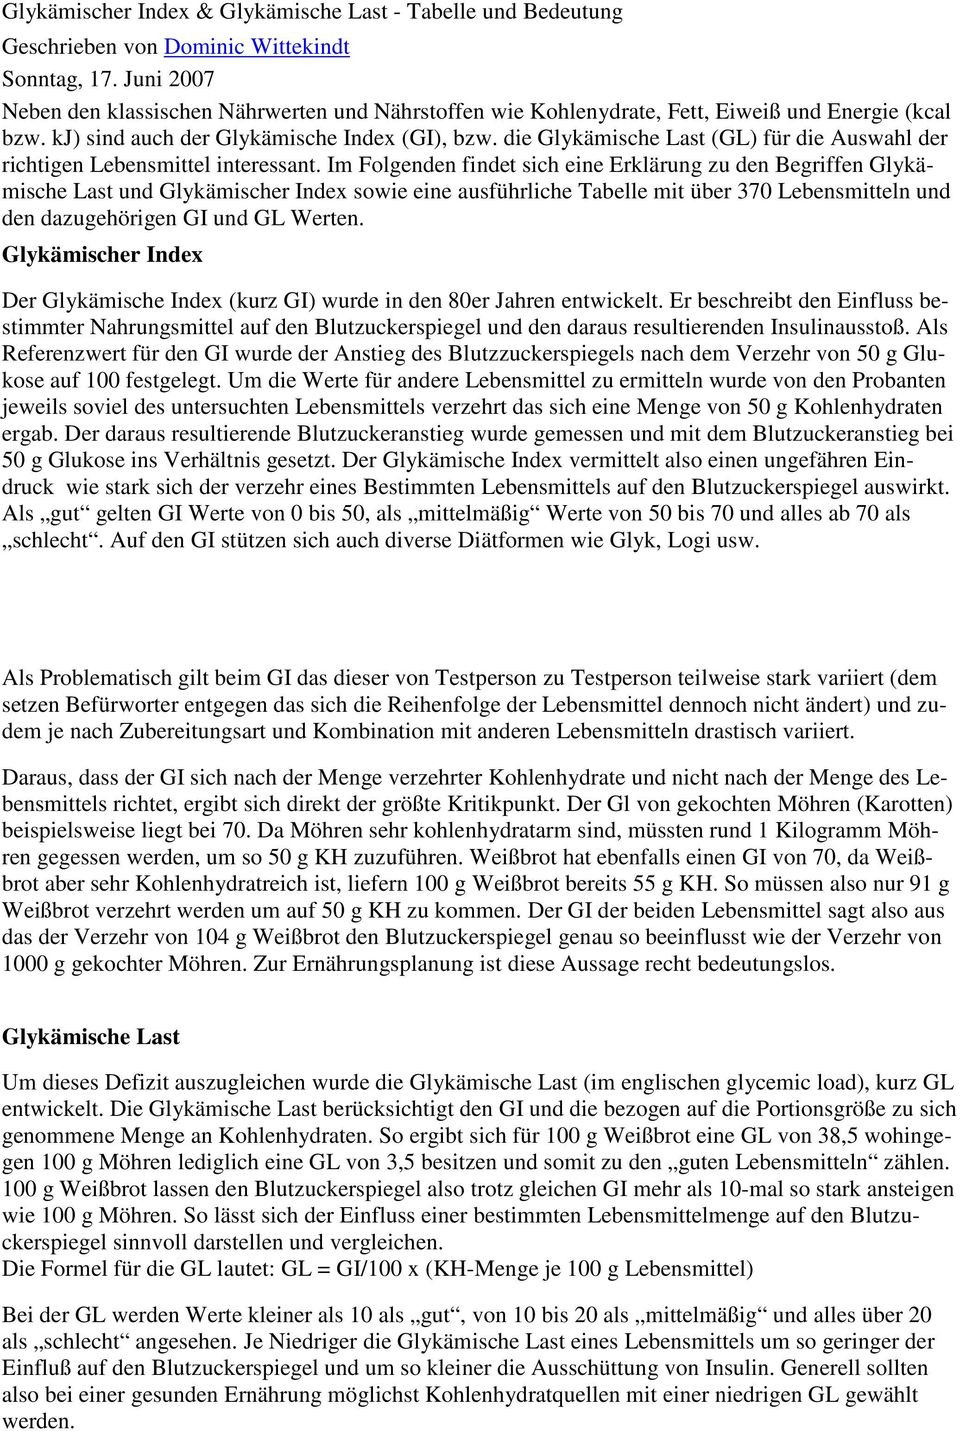 Glykämische Last Tabelle
 Glykämischer Index Glykämische Last PDF